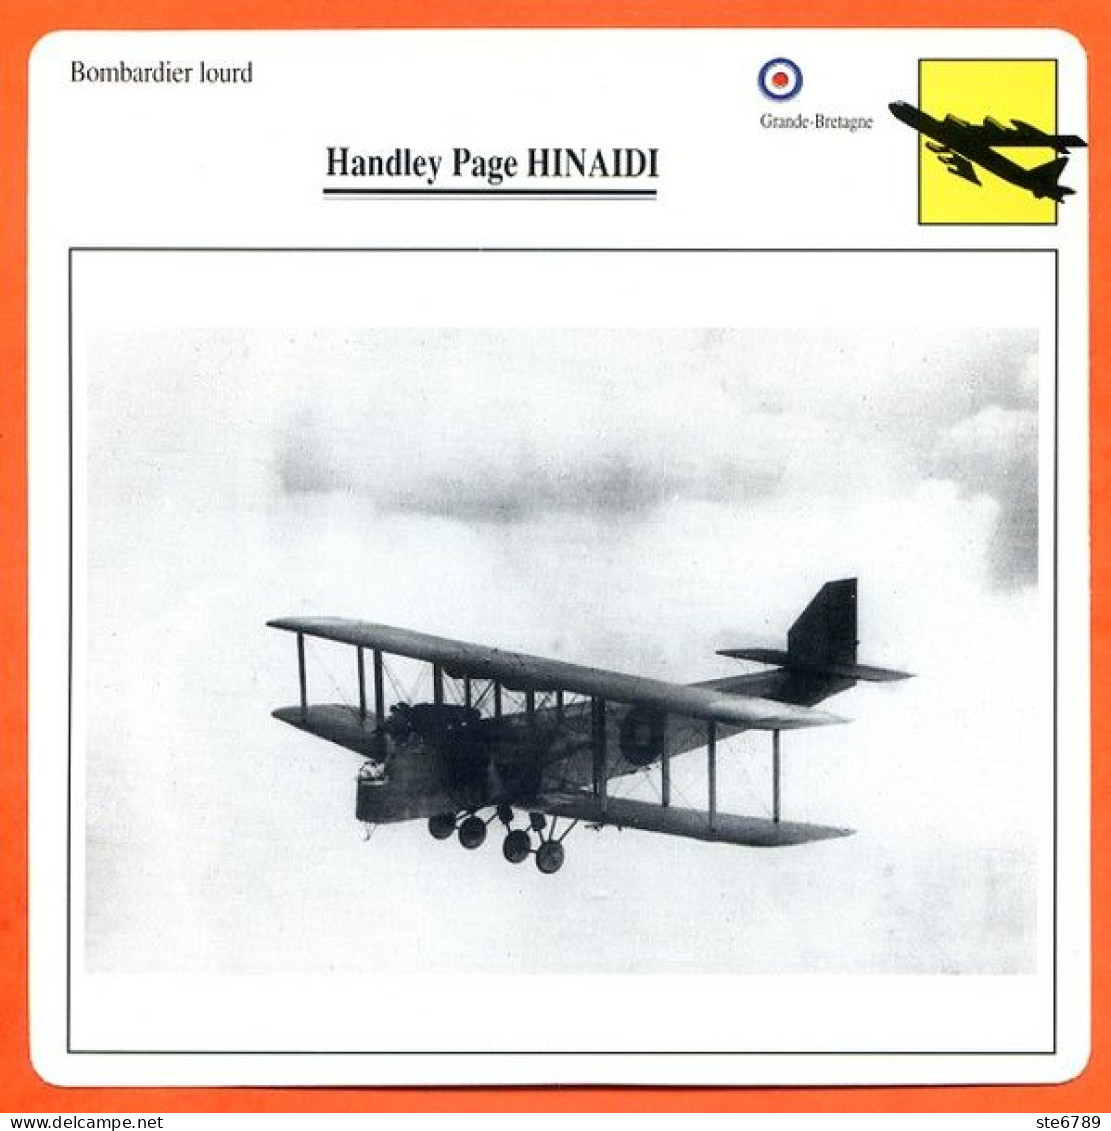 Fiche Aviation Handley Page HINAIDI  / Avion Bombardier Lourd UK Avions - Avions